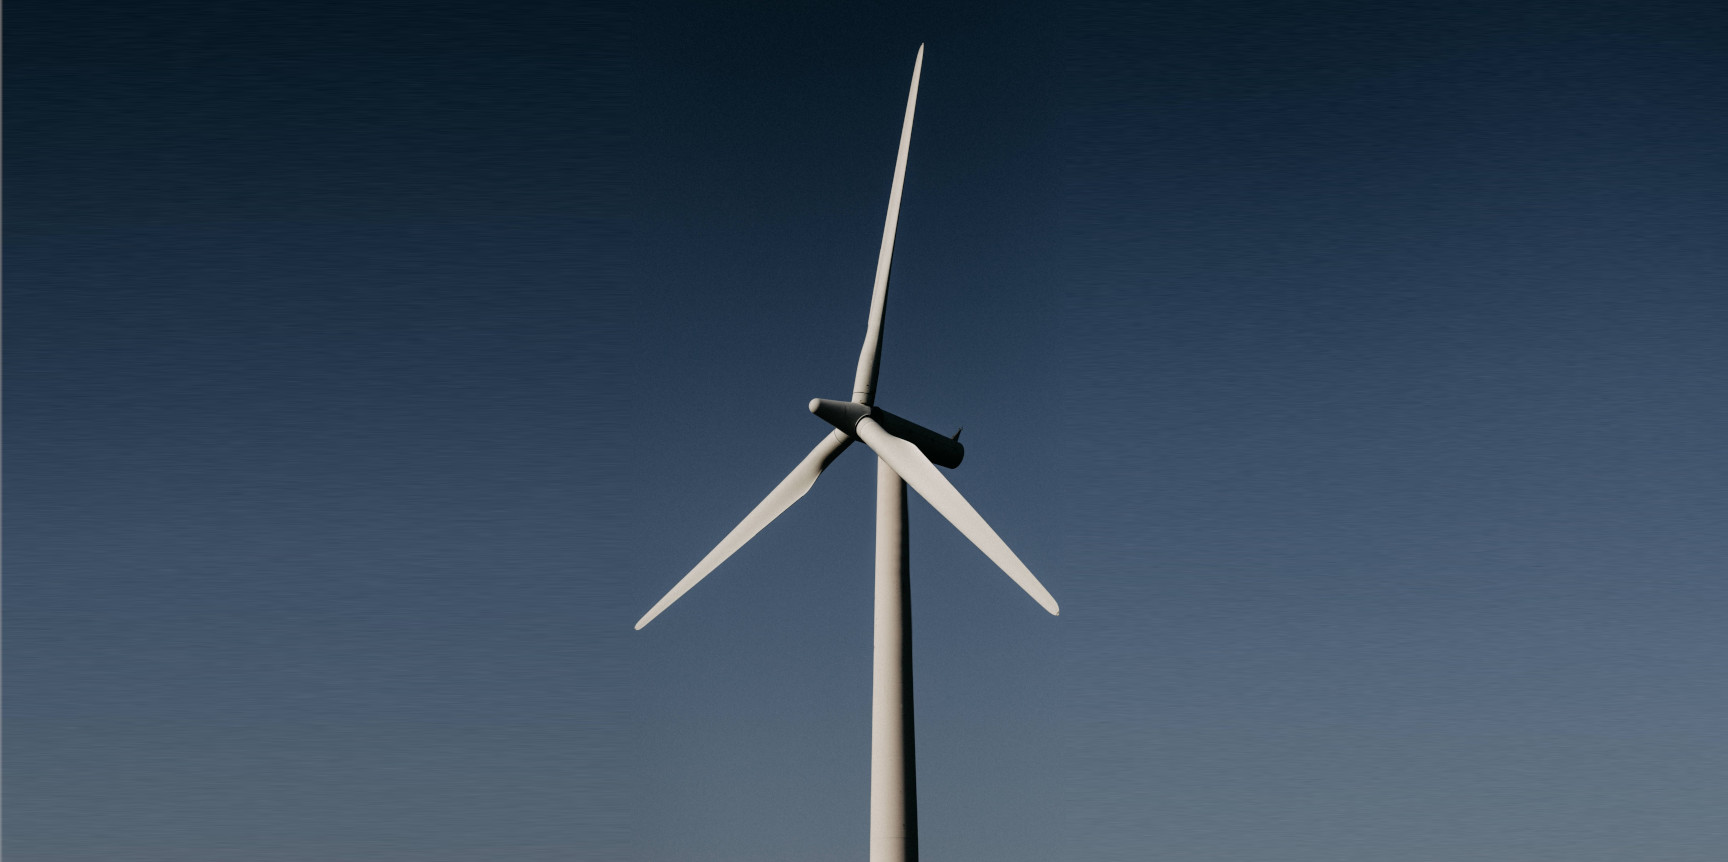 Enlarged view: Wind turbine, somewhere in Yorkshire, UK ( CC0 1.0 / T. Arran / Unsplash / edited by o-media)